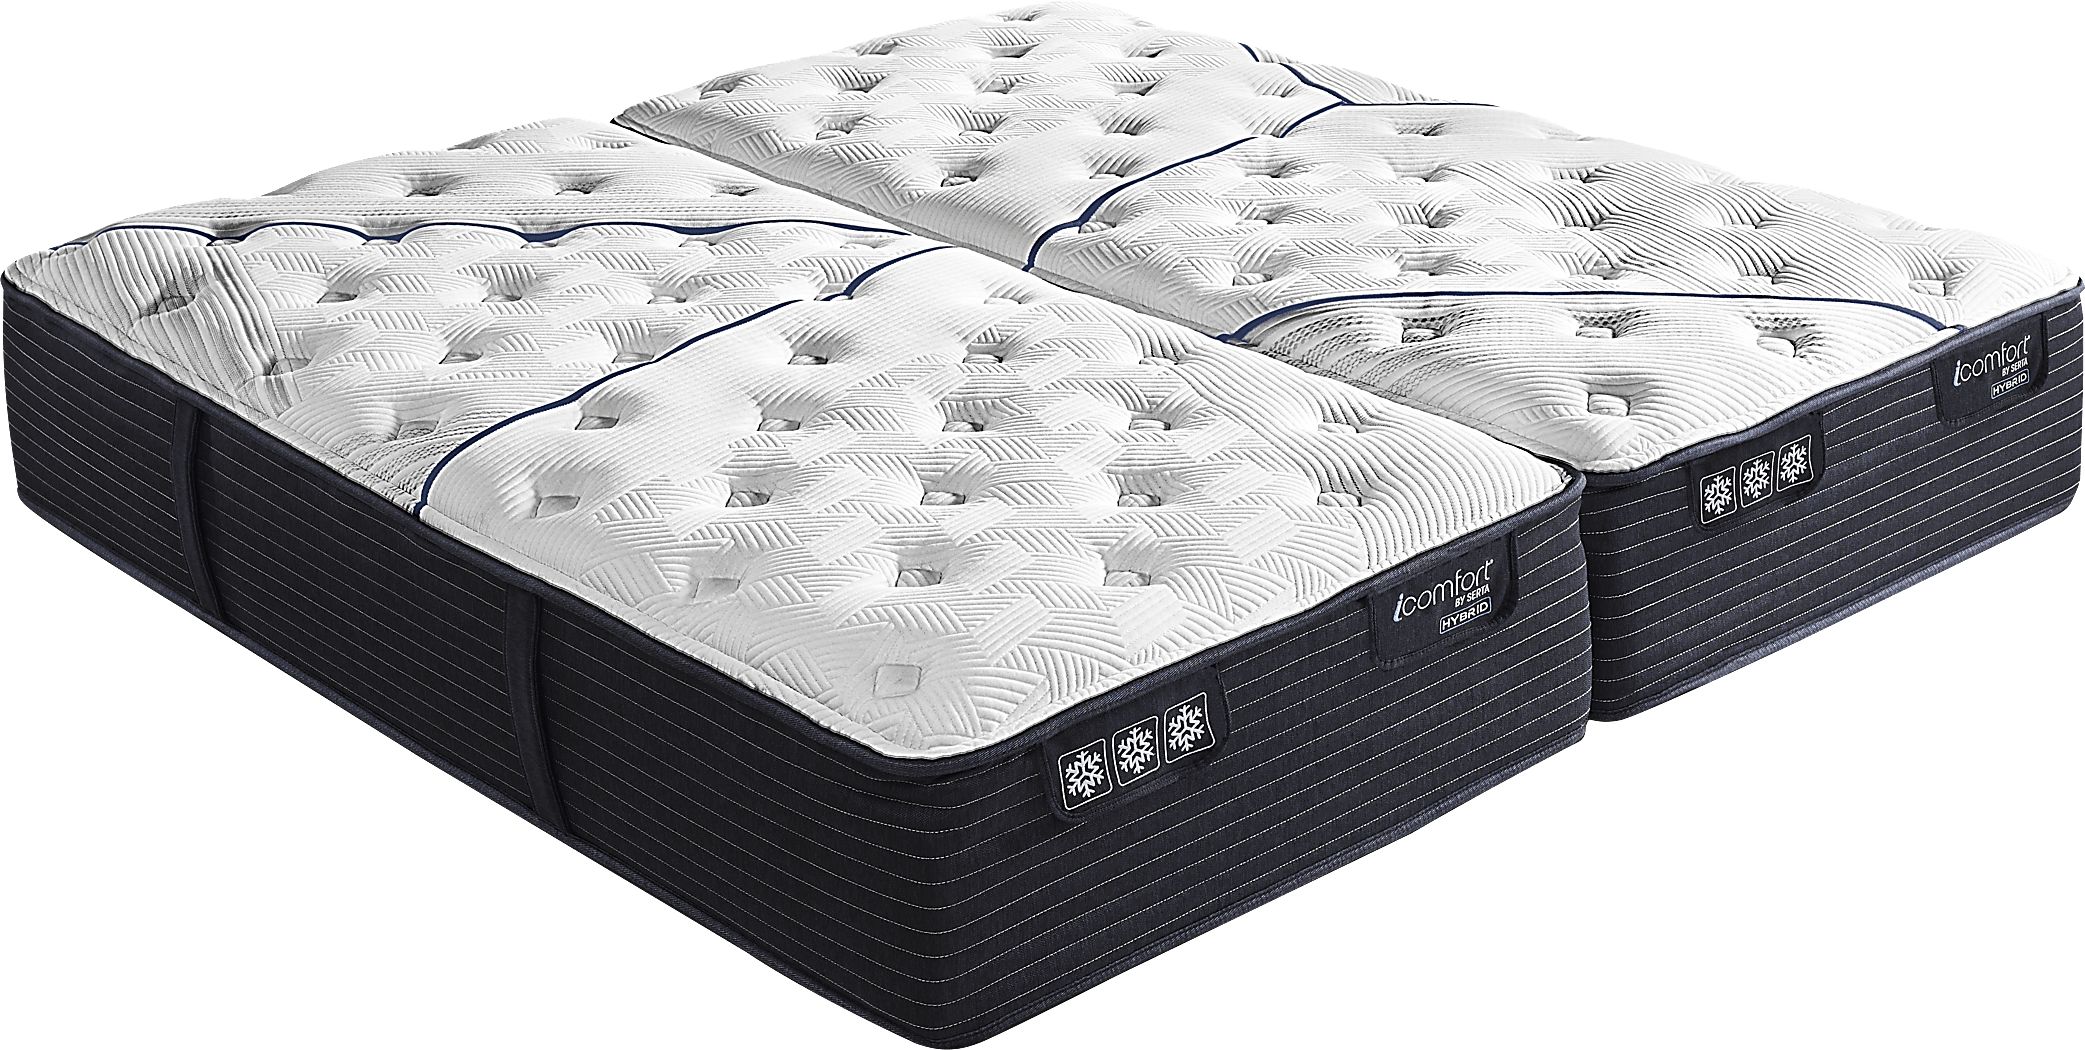 icomfort king mattress generations cooling system